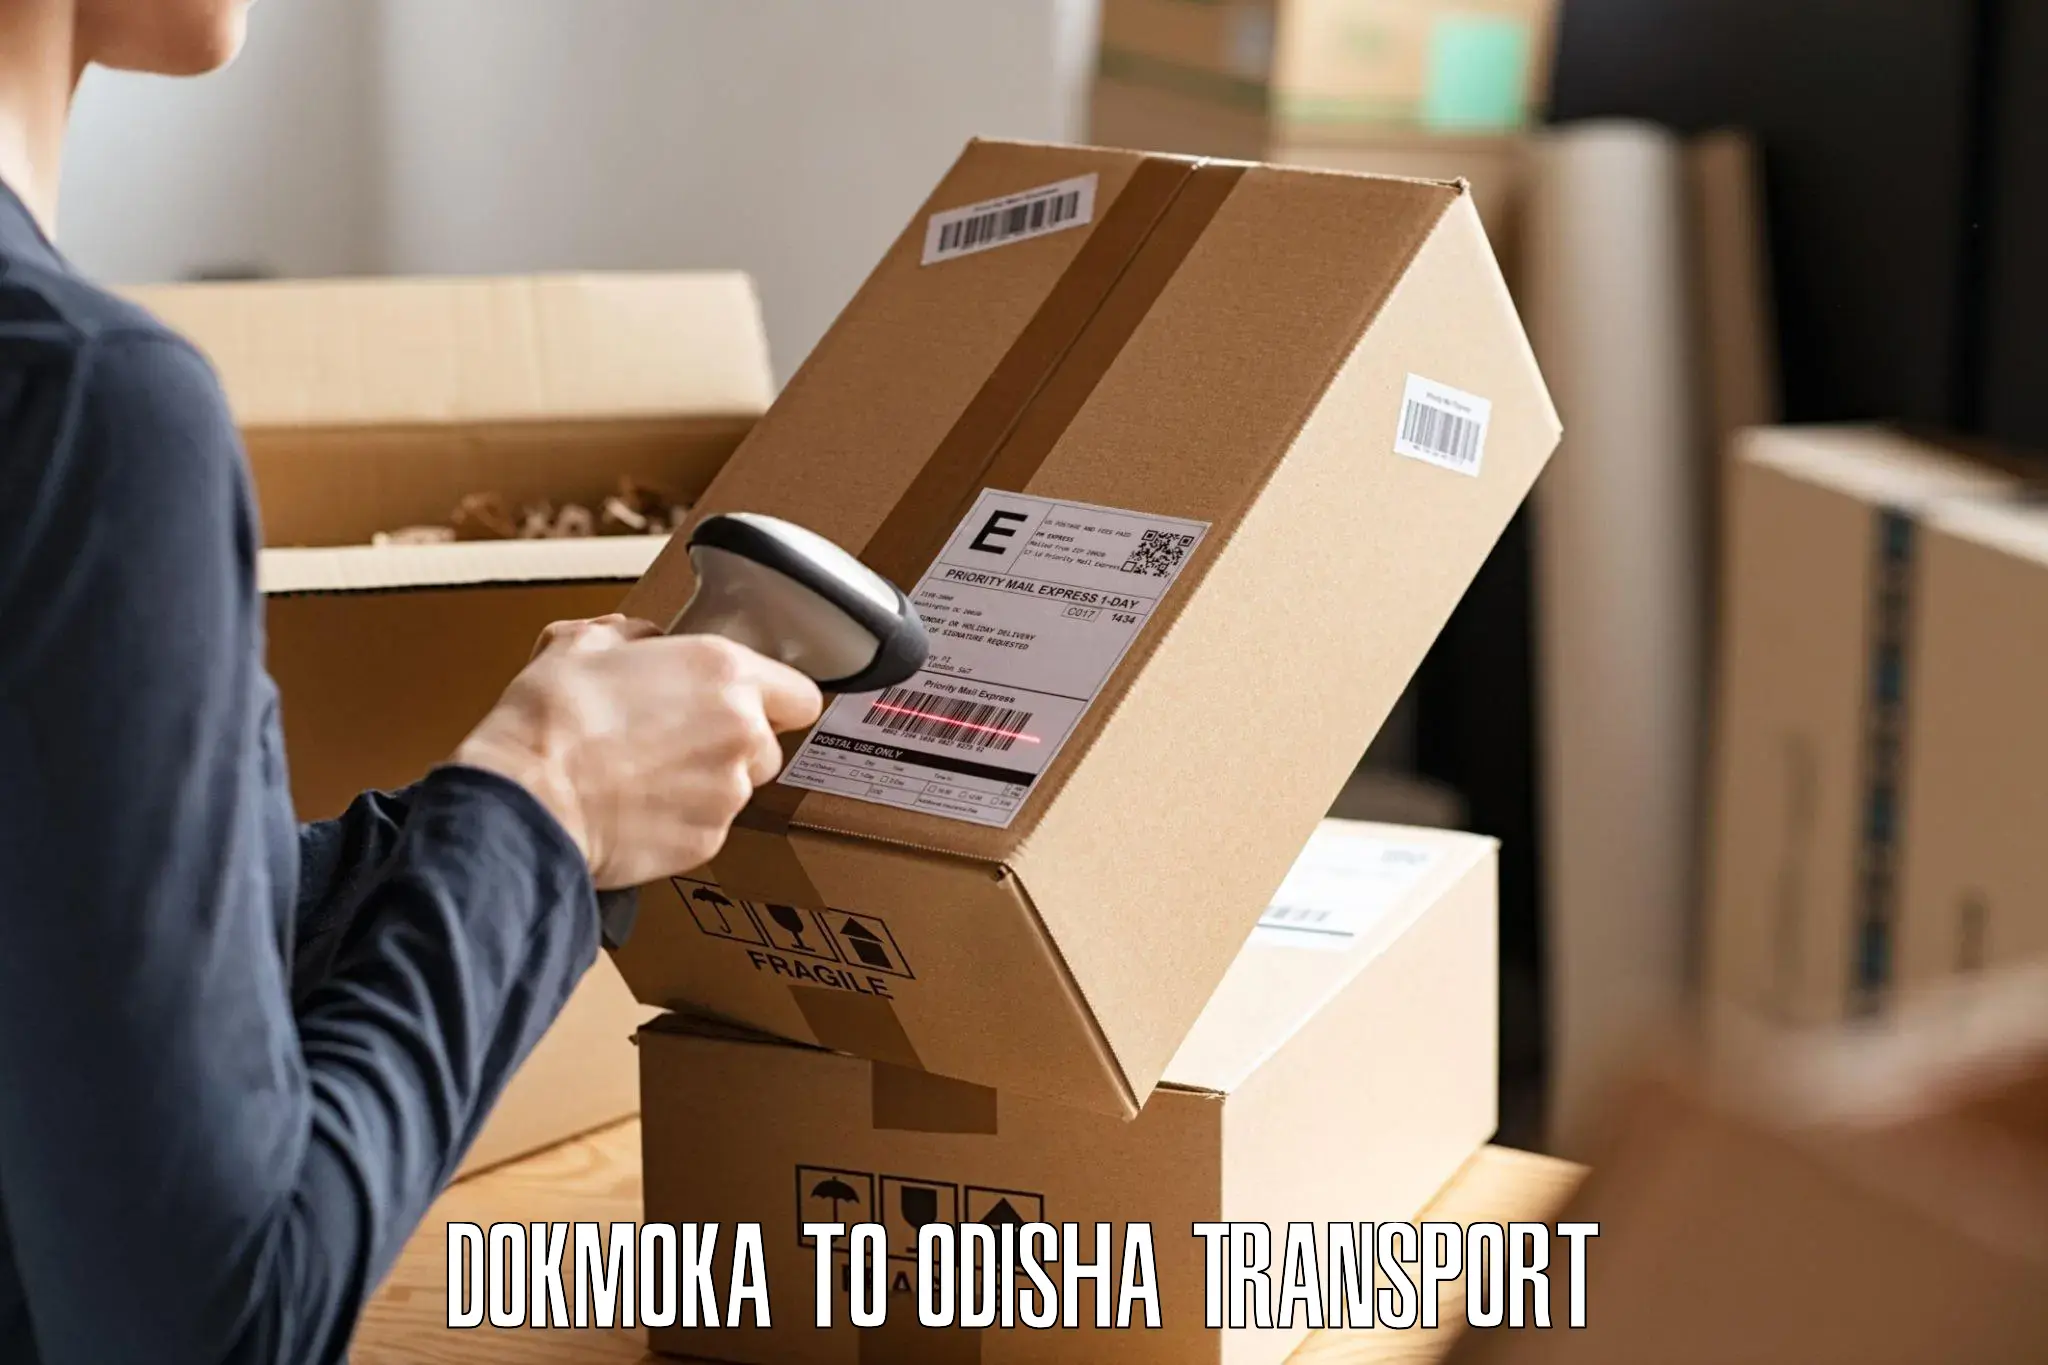 Shipping partner Dokmoka to Angul